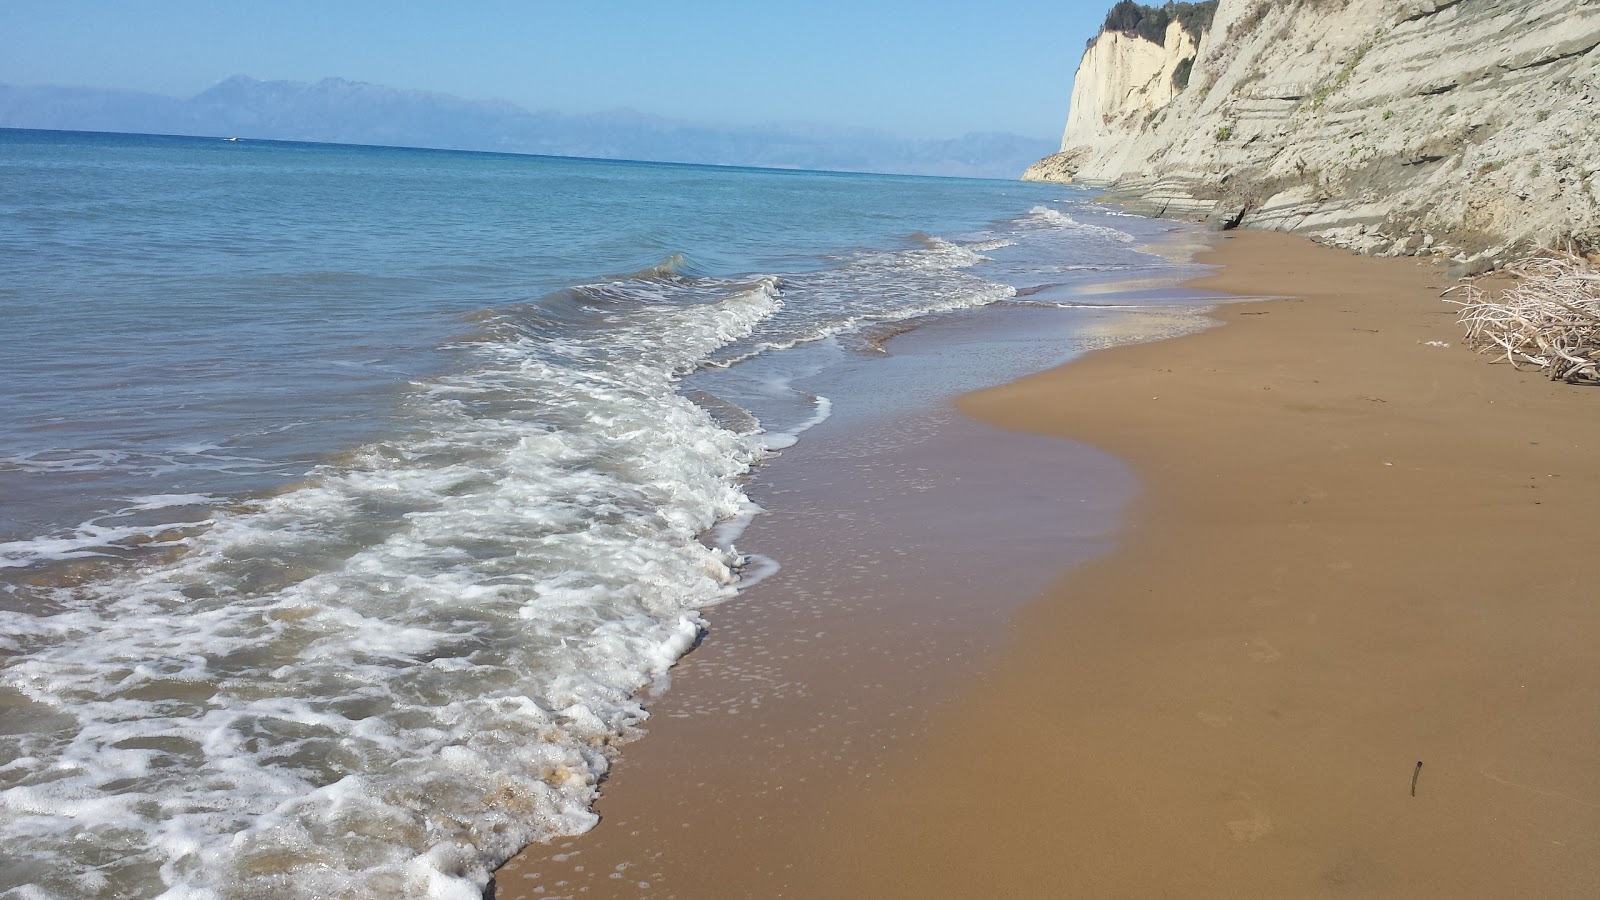 Photo of Katevasidi beach and its beautiful scenery